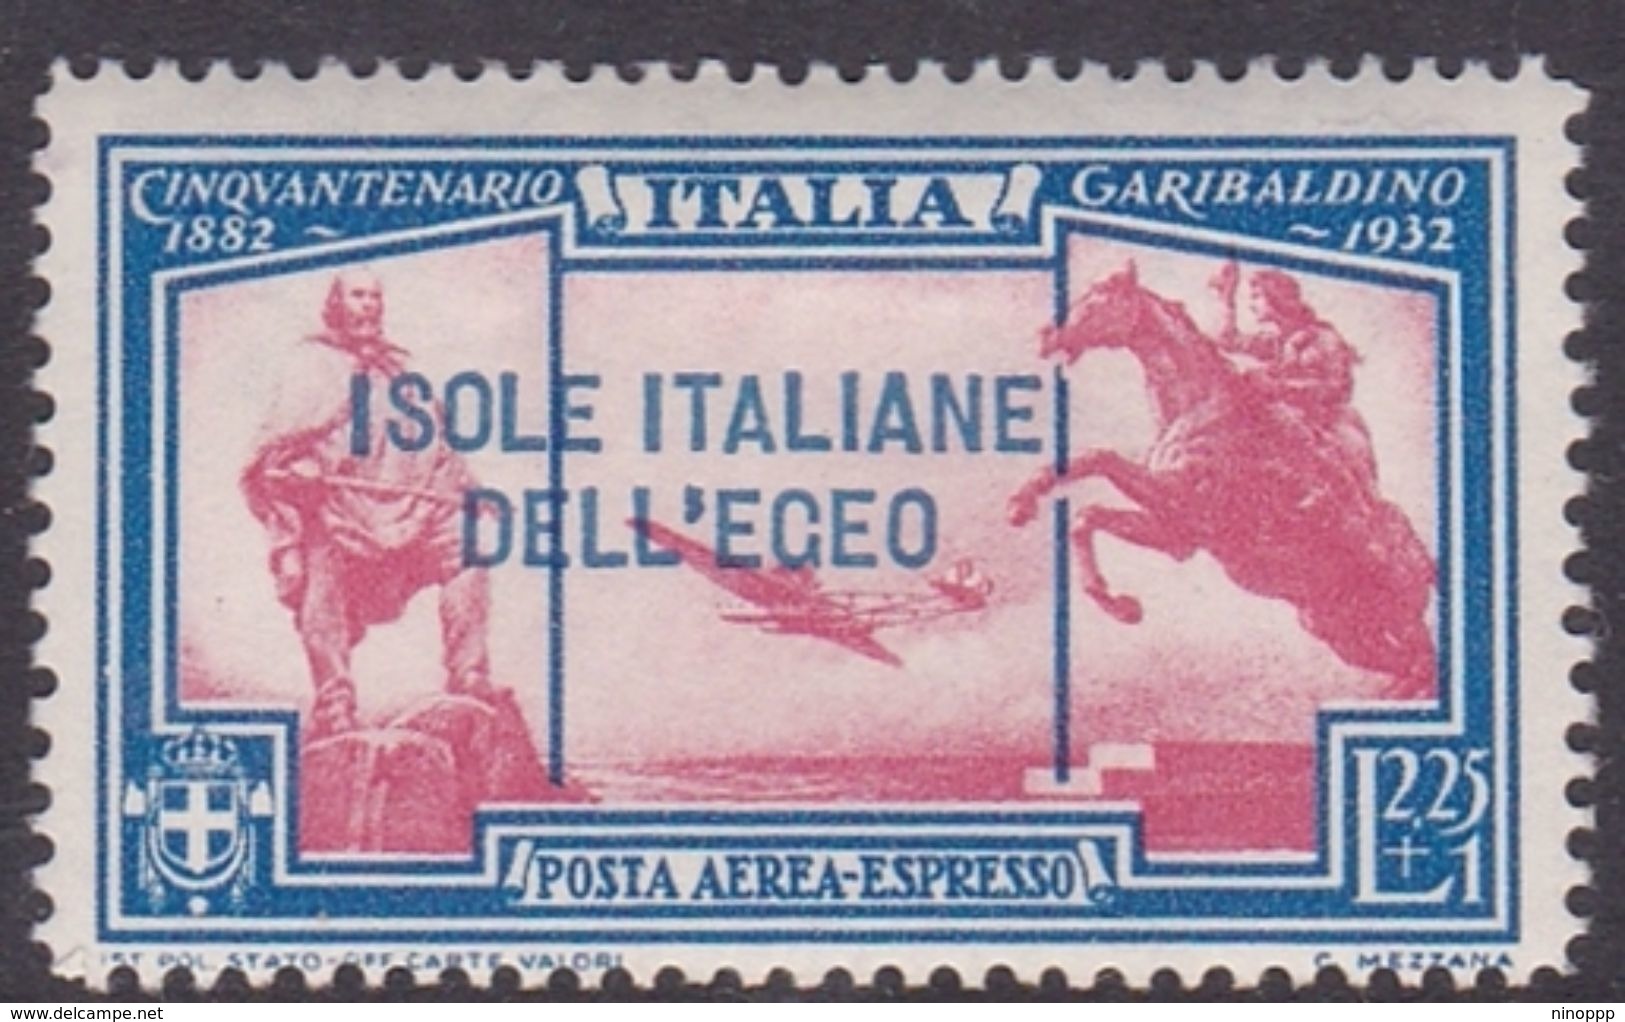 Italy-Colonies And Territories-Aegean General Issue-Rodi A19 1932 Air Mail Garibaldi 2,25 Lira+1 Lira Air Express MH - Emissions Générales